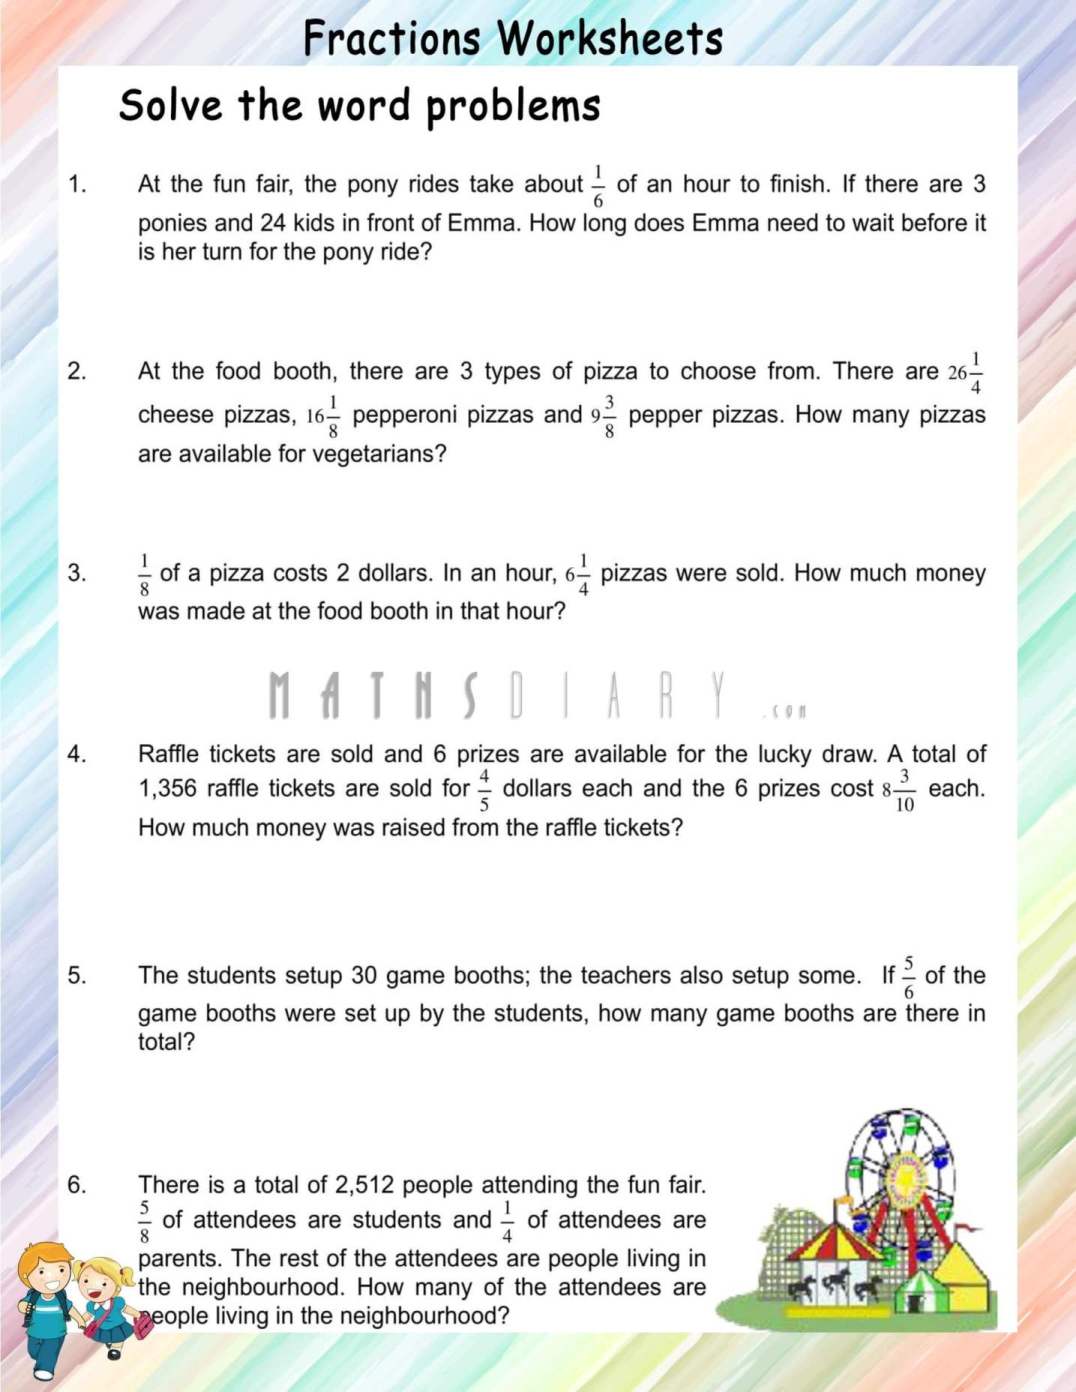 fraction problem solving questions grade 5